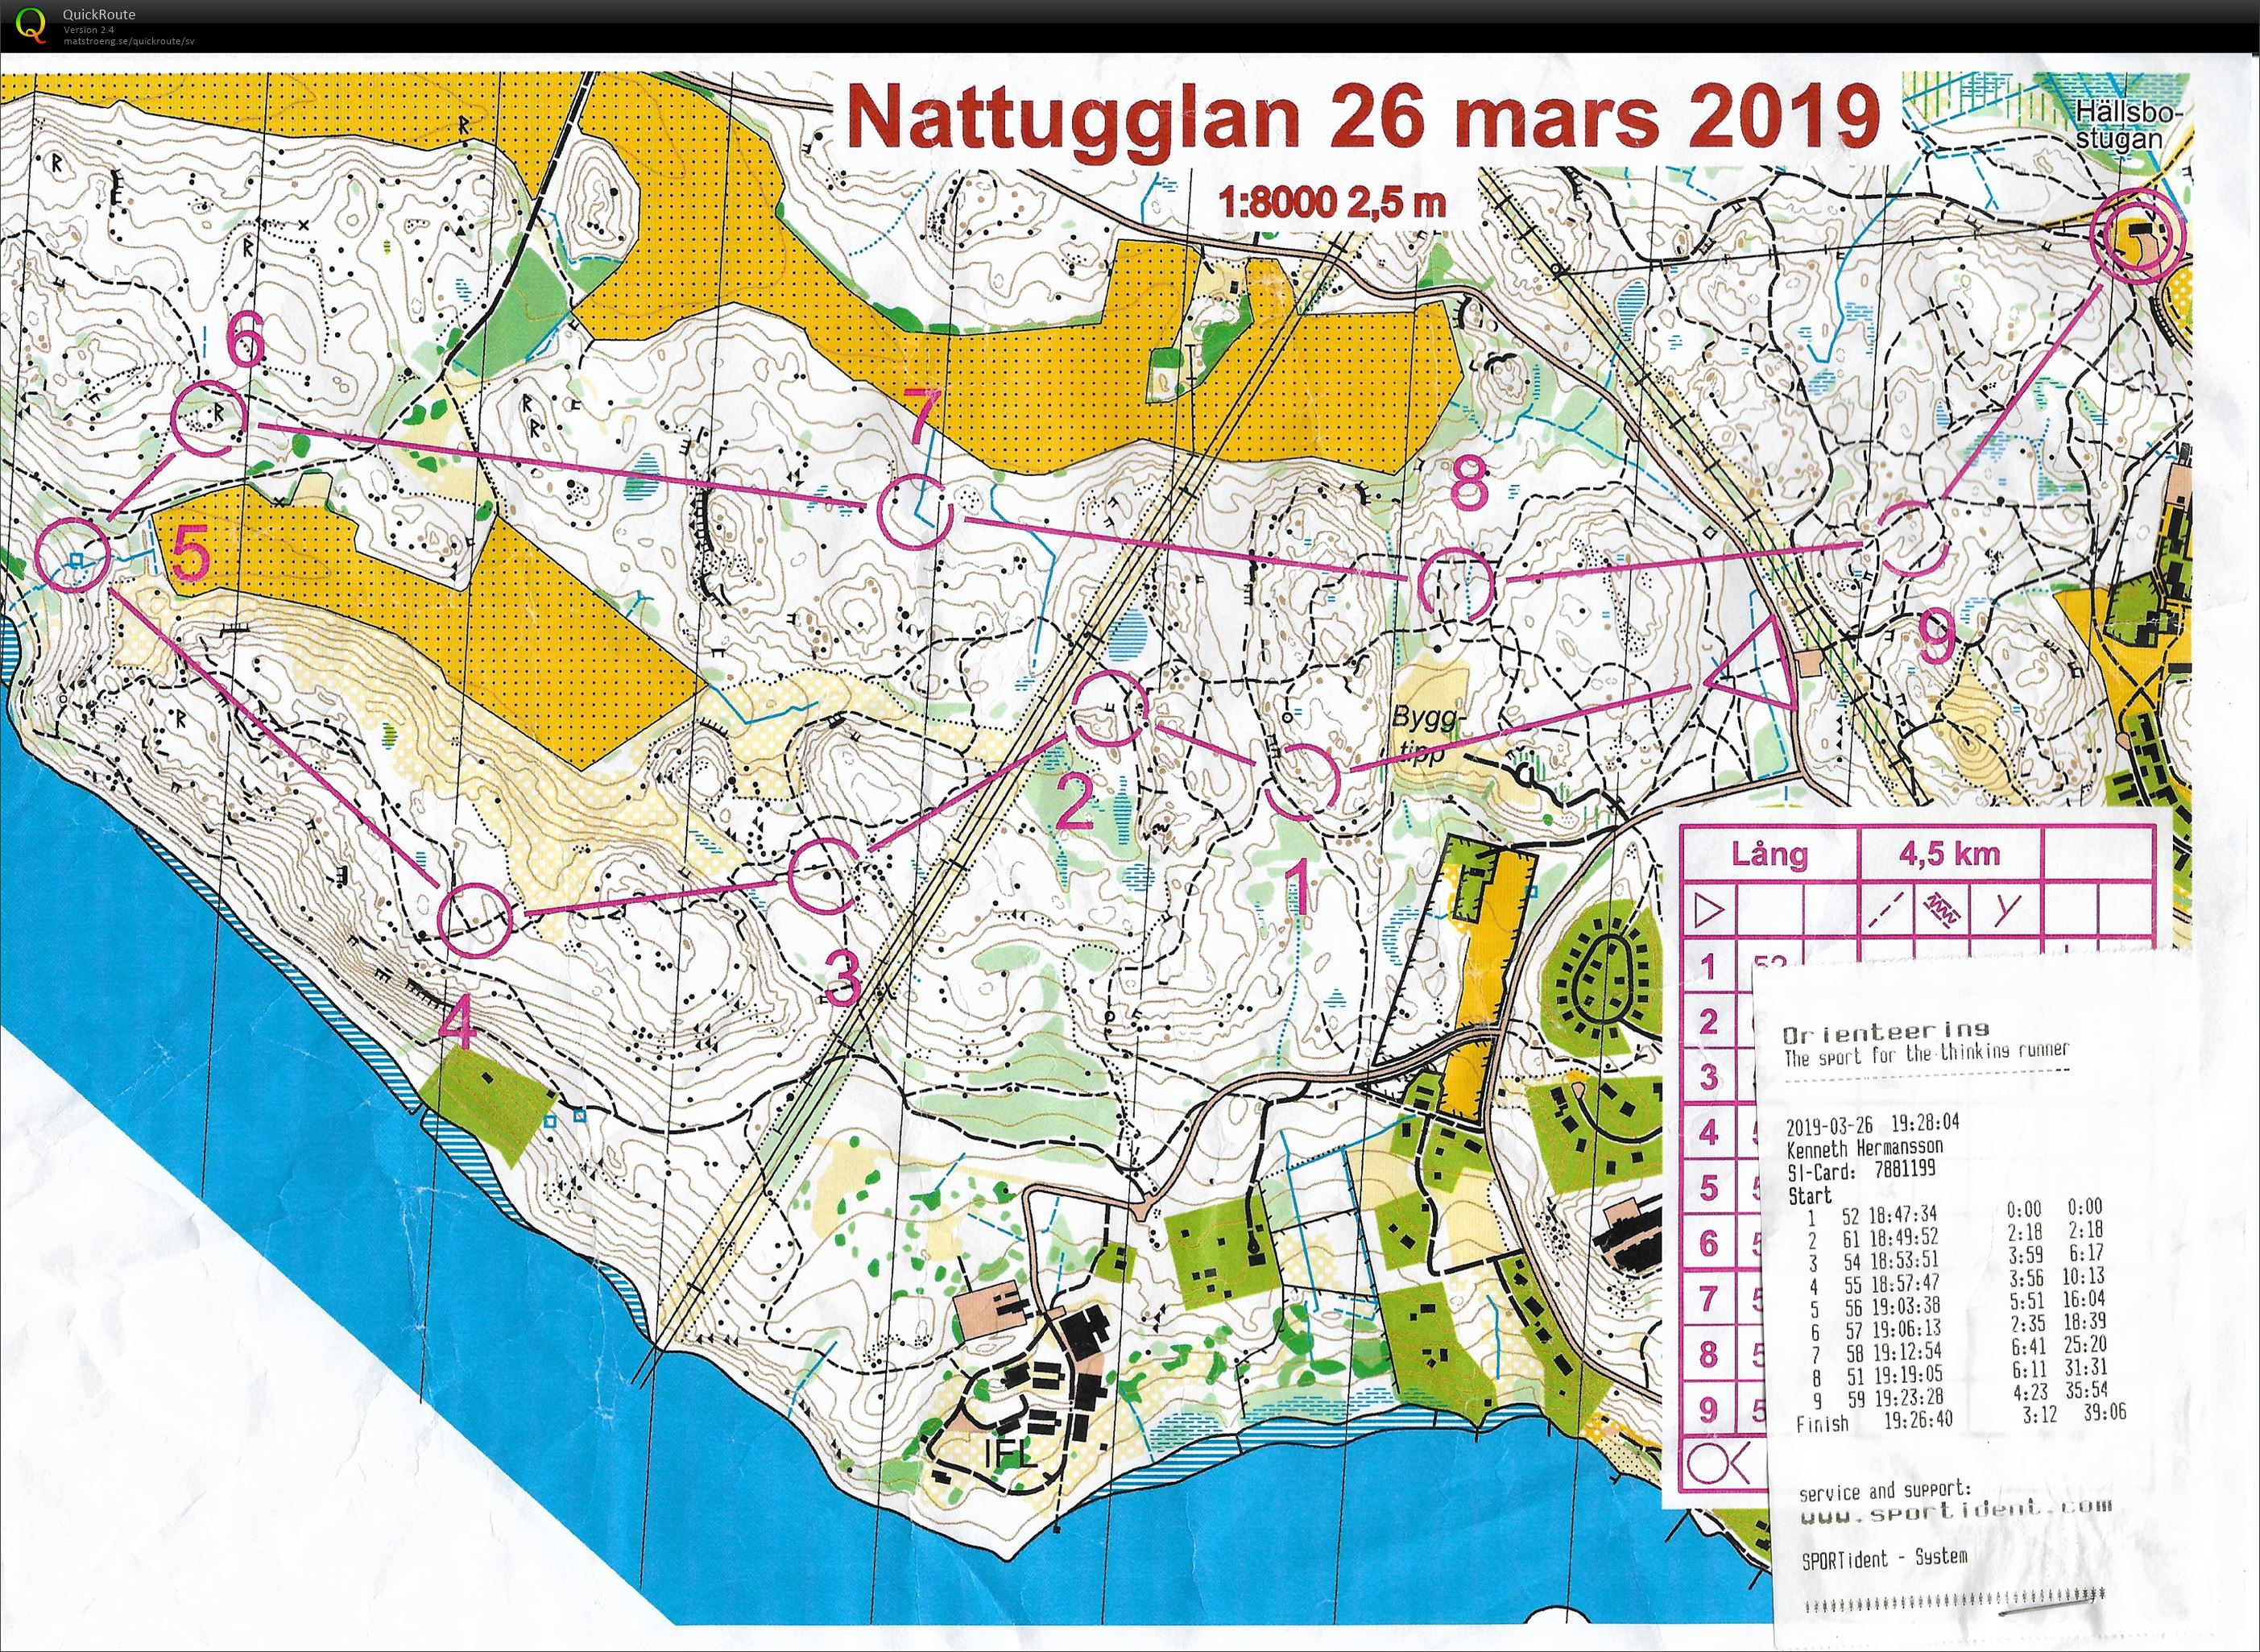 Nattugglan Final (26-03-2019)